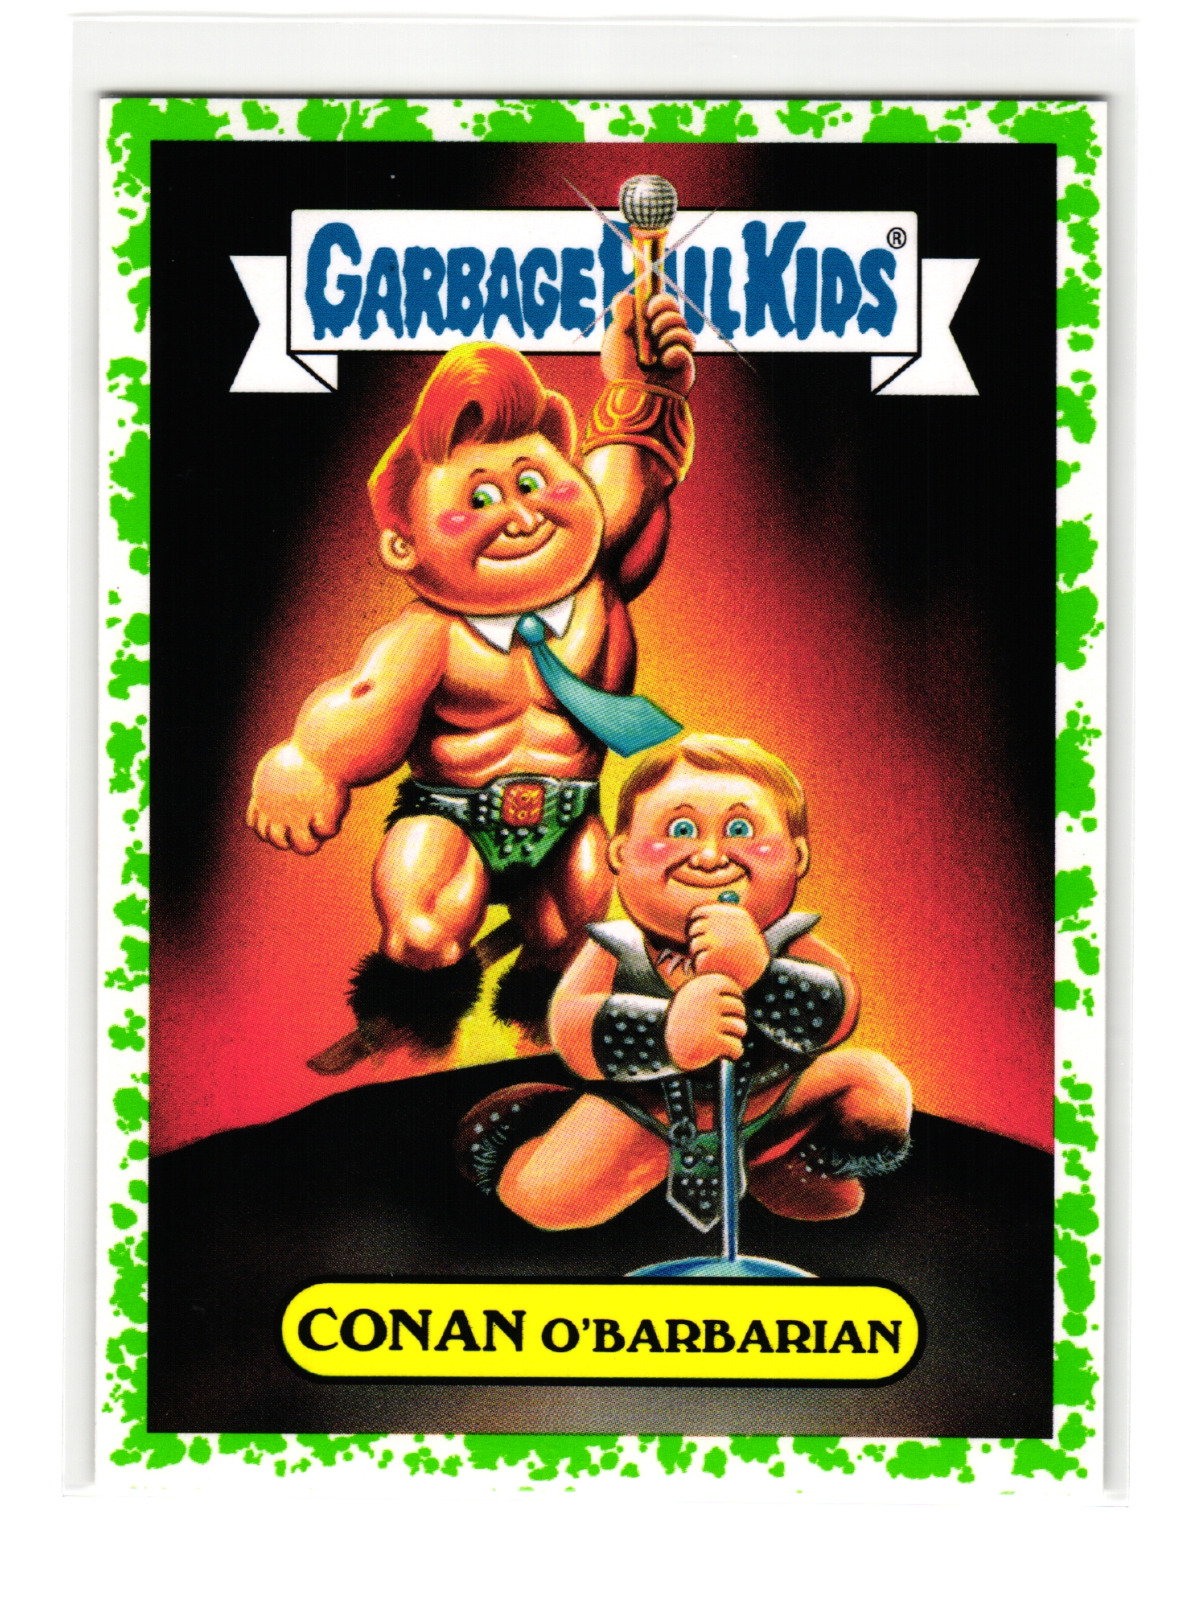 Conan O\'Barbarian 2016 Topps Garbage Pail Kids Late Night Parody Sticker Card 2a